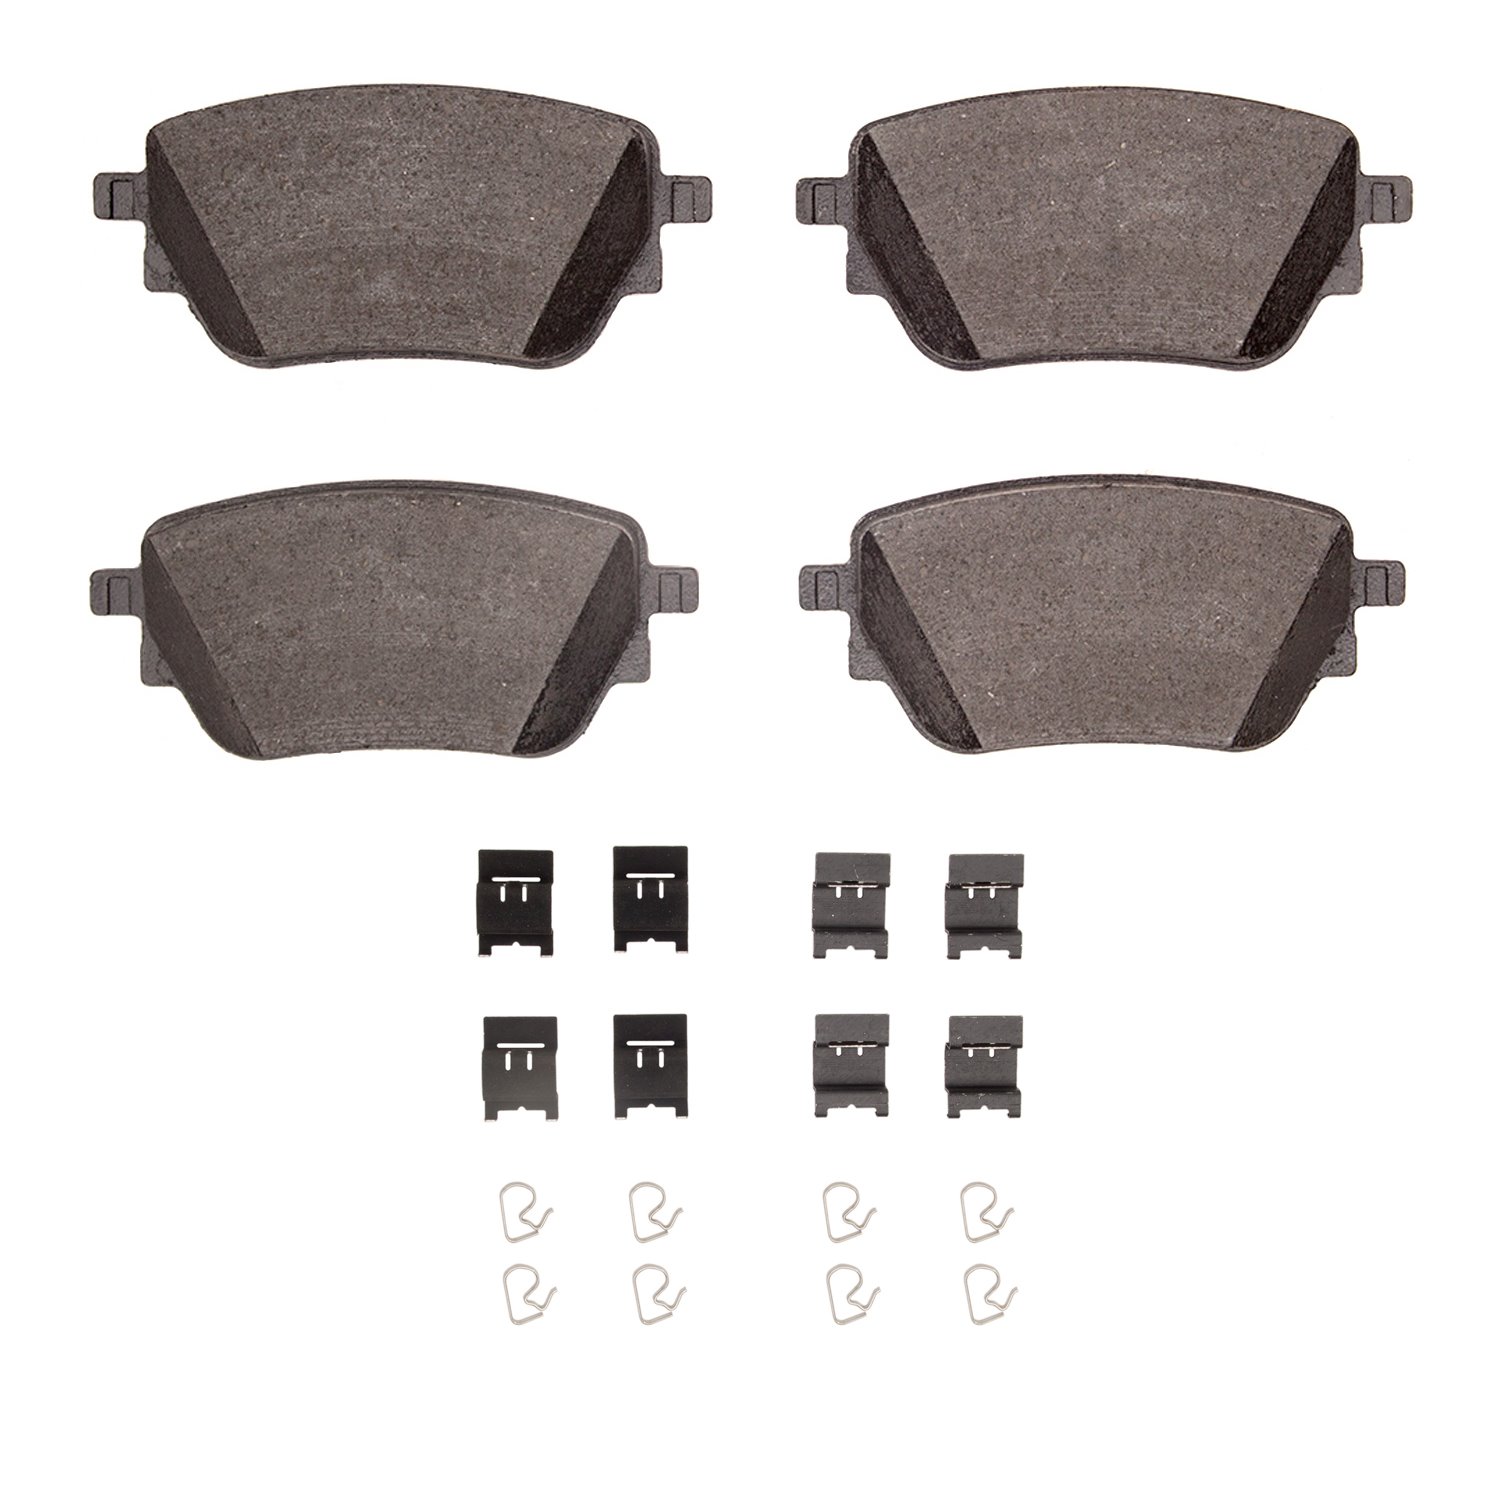 1310-2207-01 3000-Series Ceramic Brake Pads & Hardware Kit, Fits Select Mercedes-Benz, Position: Rear